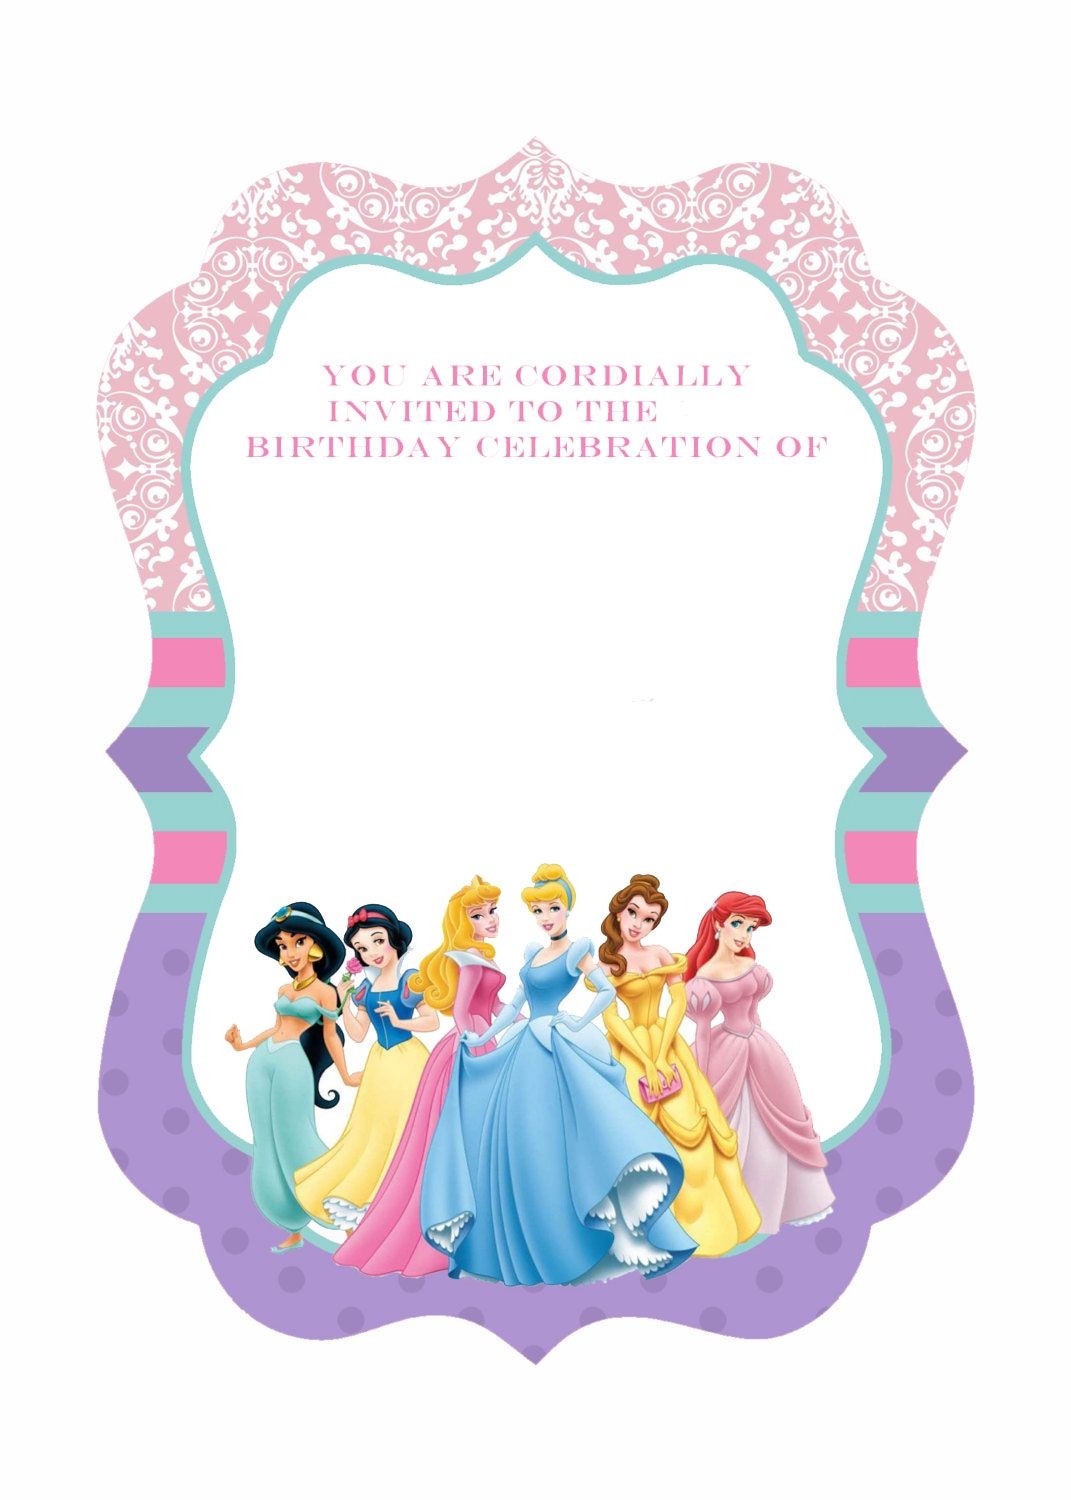 Cool FREE Template Free Printable Ornate Disney Princesses Invitation Princess Birthday Invitations Princess Invitations Disney Princess Invitations - Disney Princess Free Printable Invitations